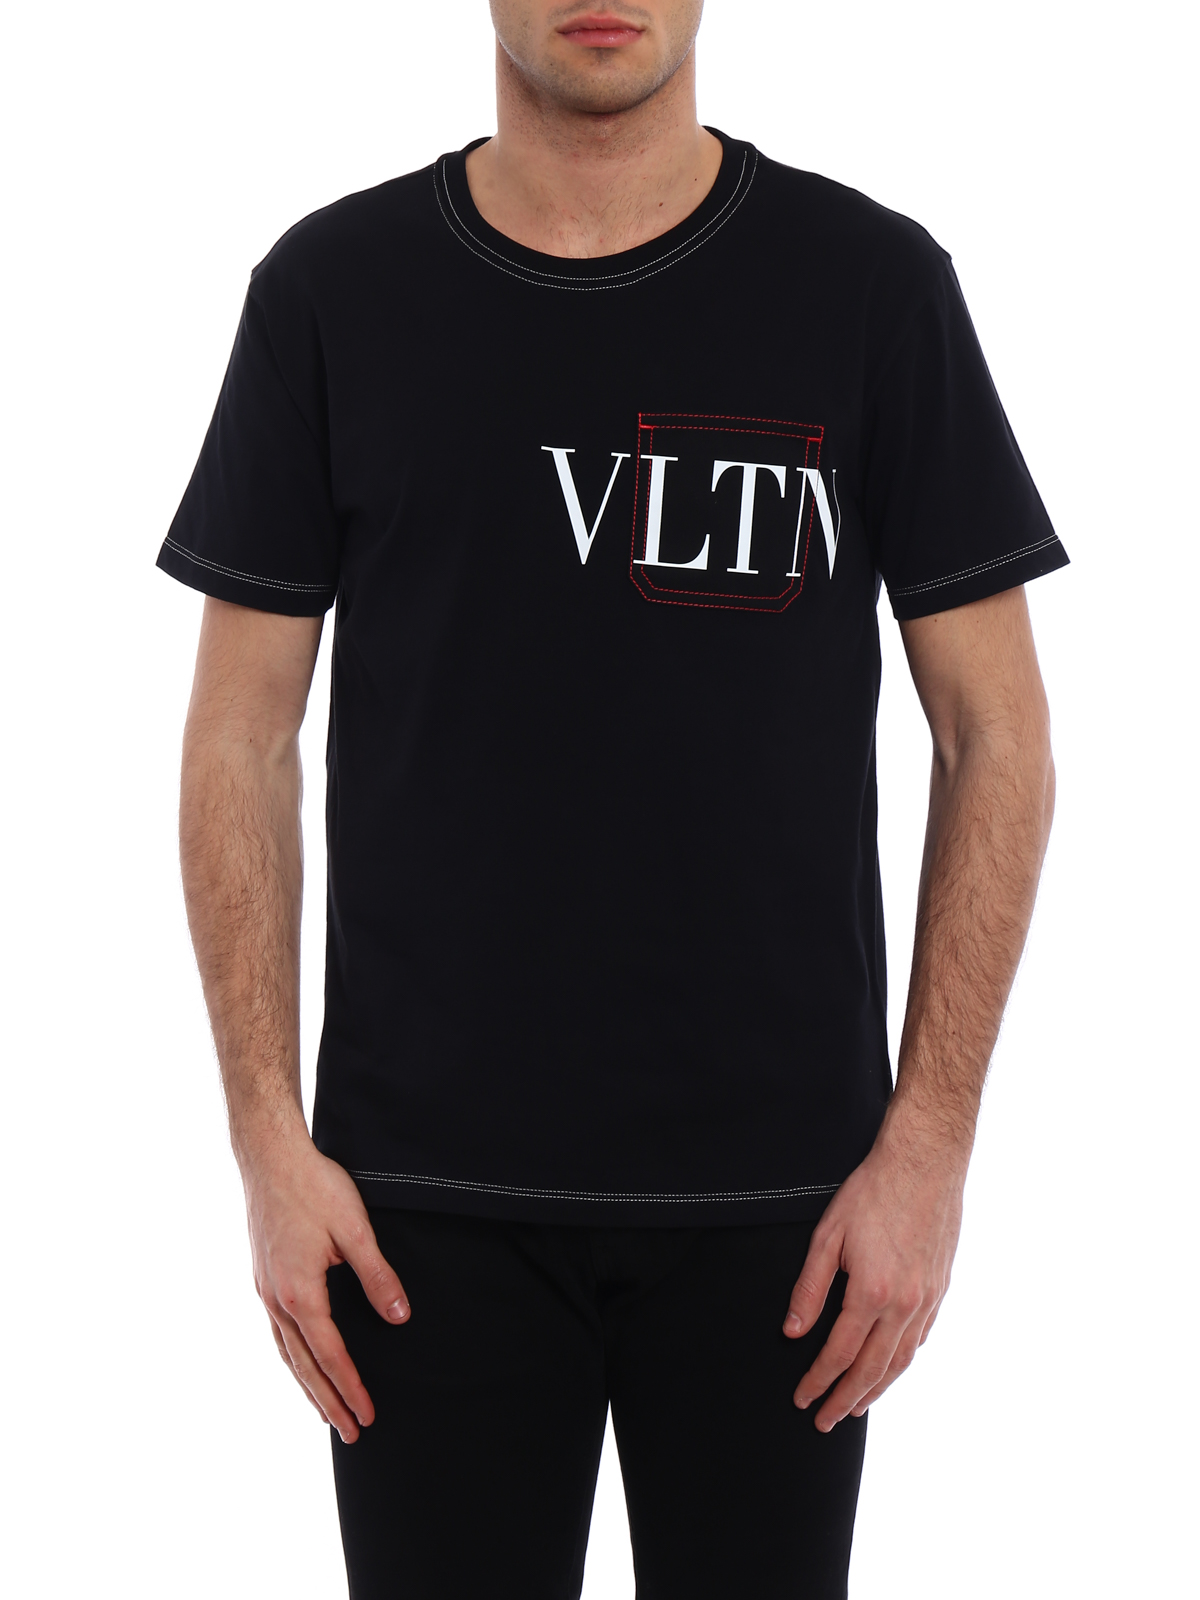 valentino t shirt vltn Big sale - OFF 69%